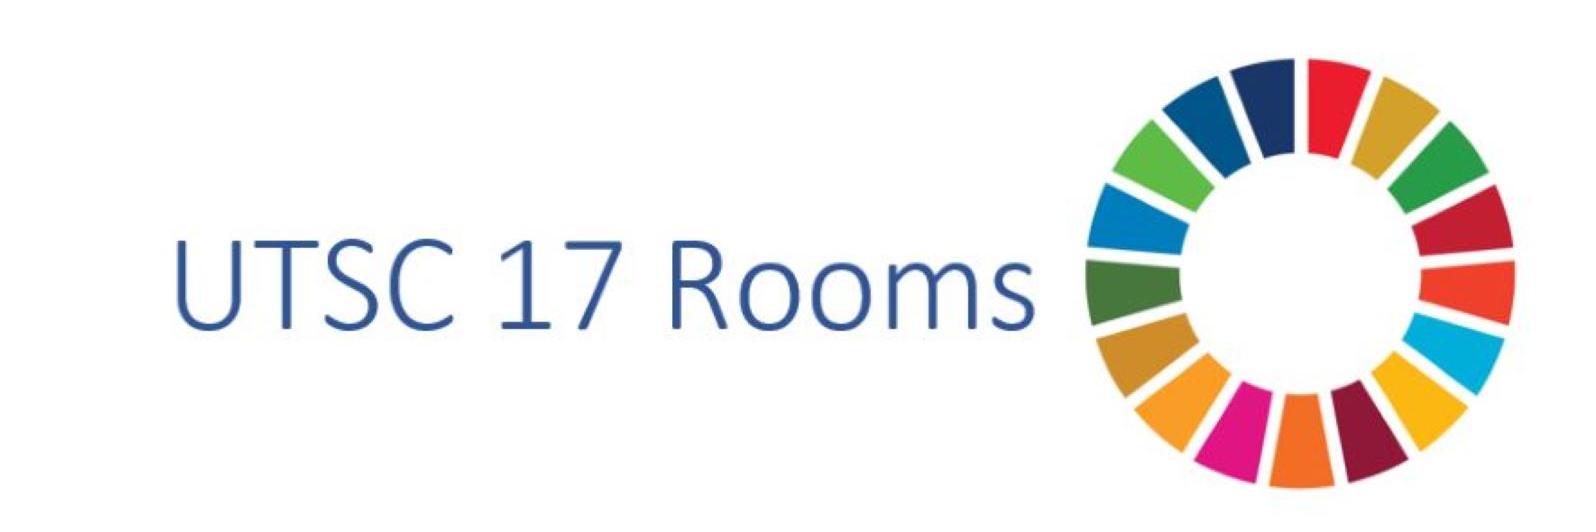 Meet the 17 Rooms 